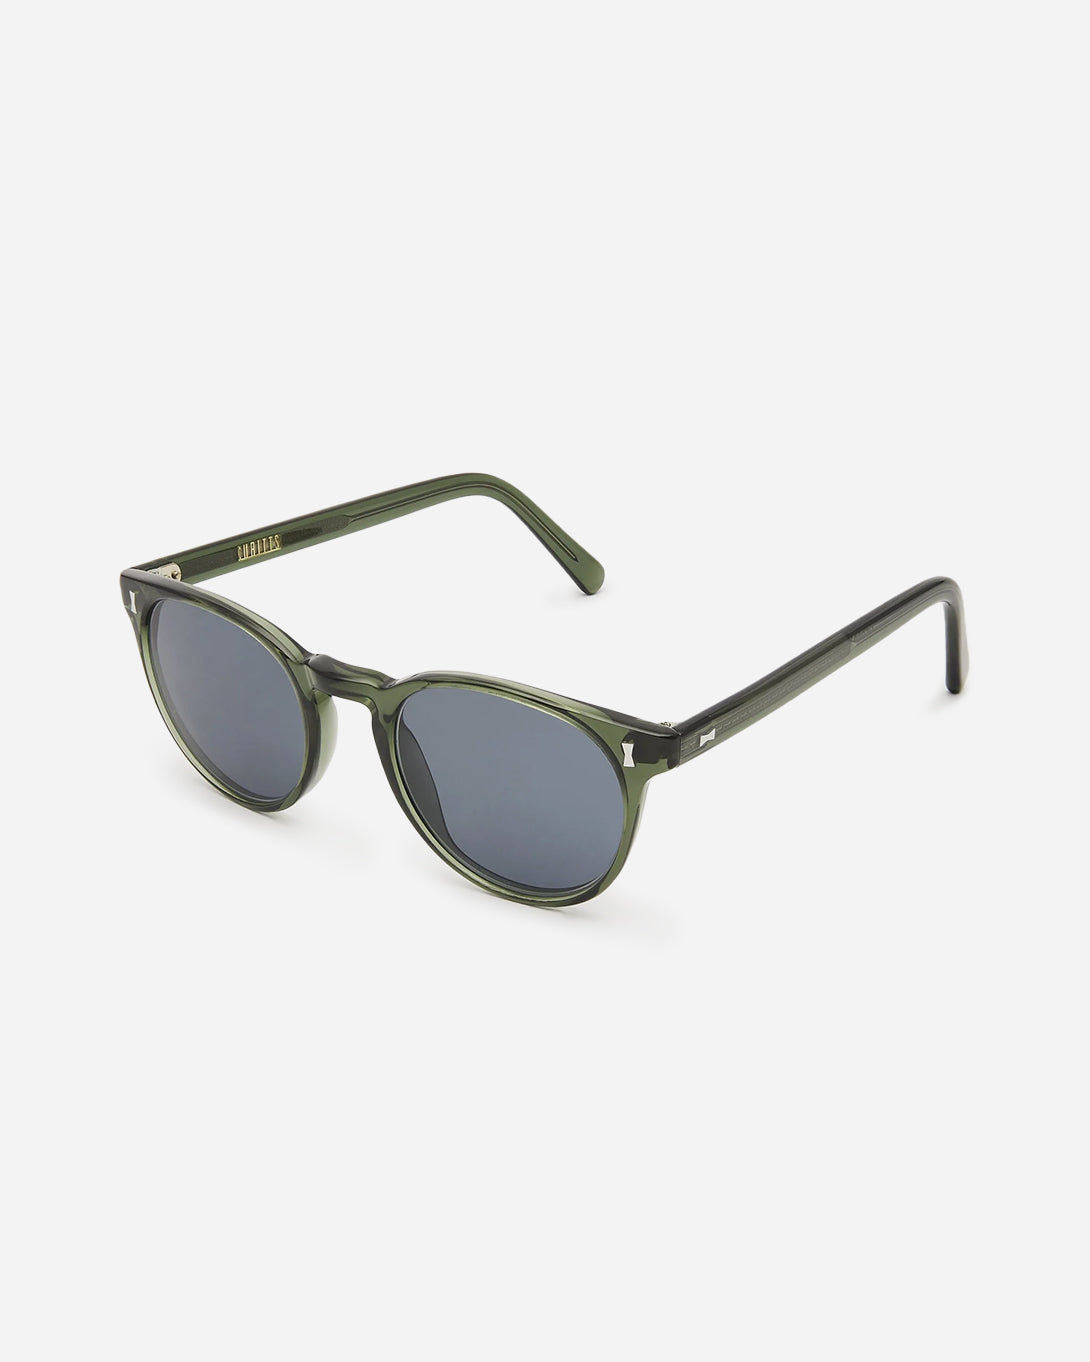 Celadon Herbrand Cubitts Sunglasses